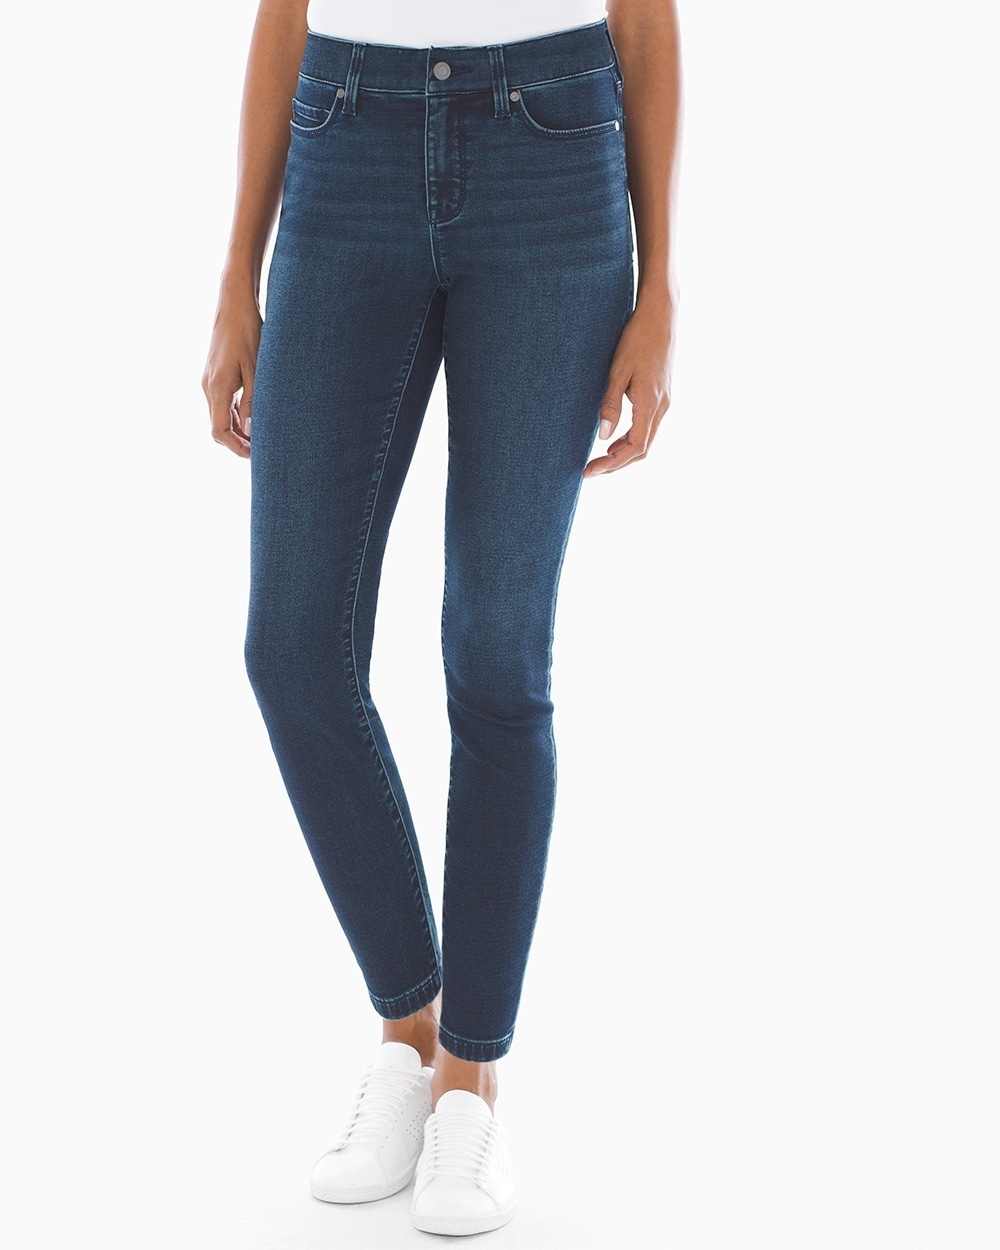 Style Essentials Slimming 5 Pocket Jeans